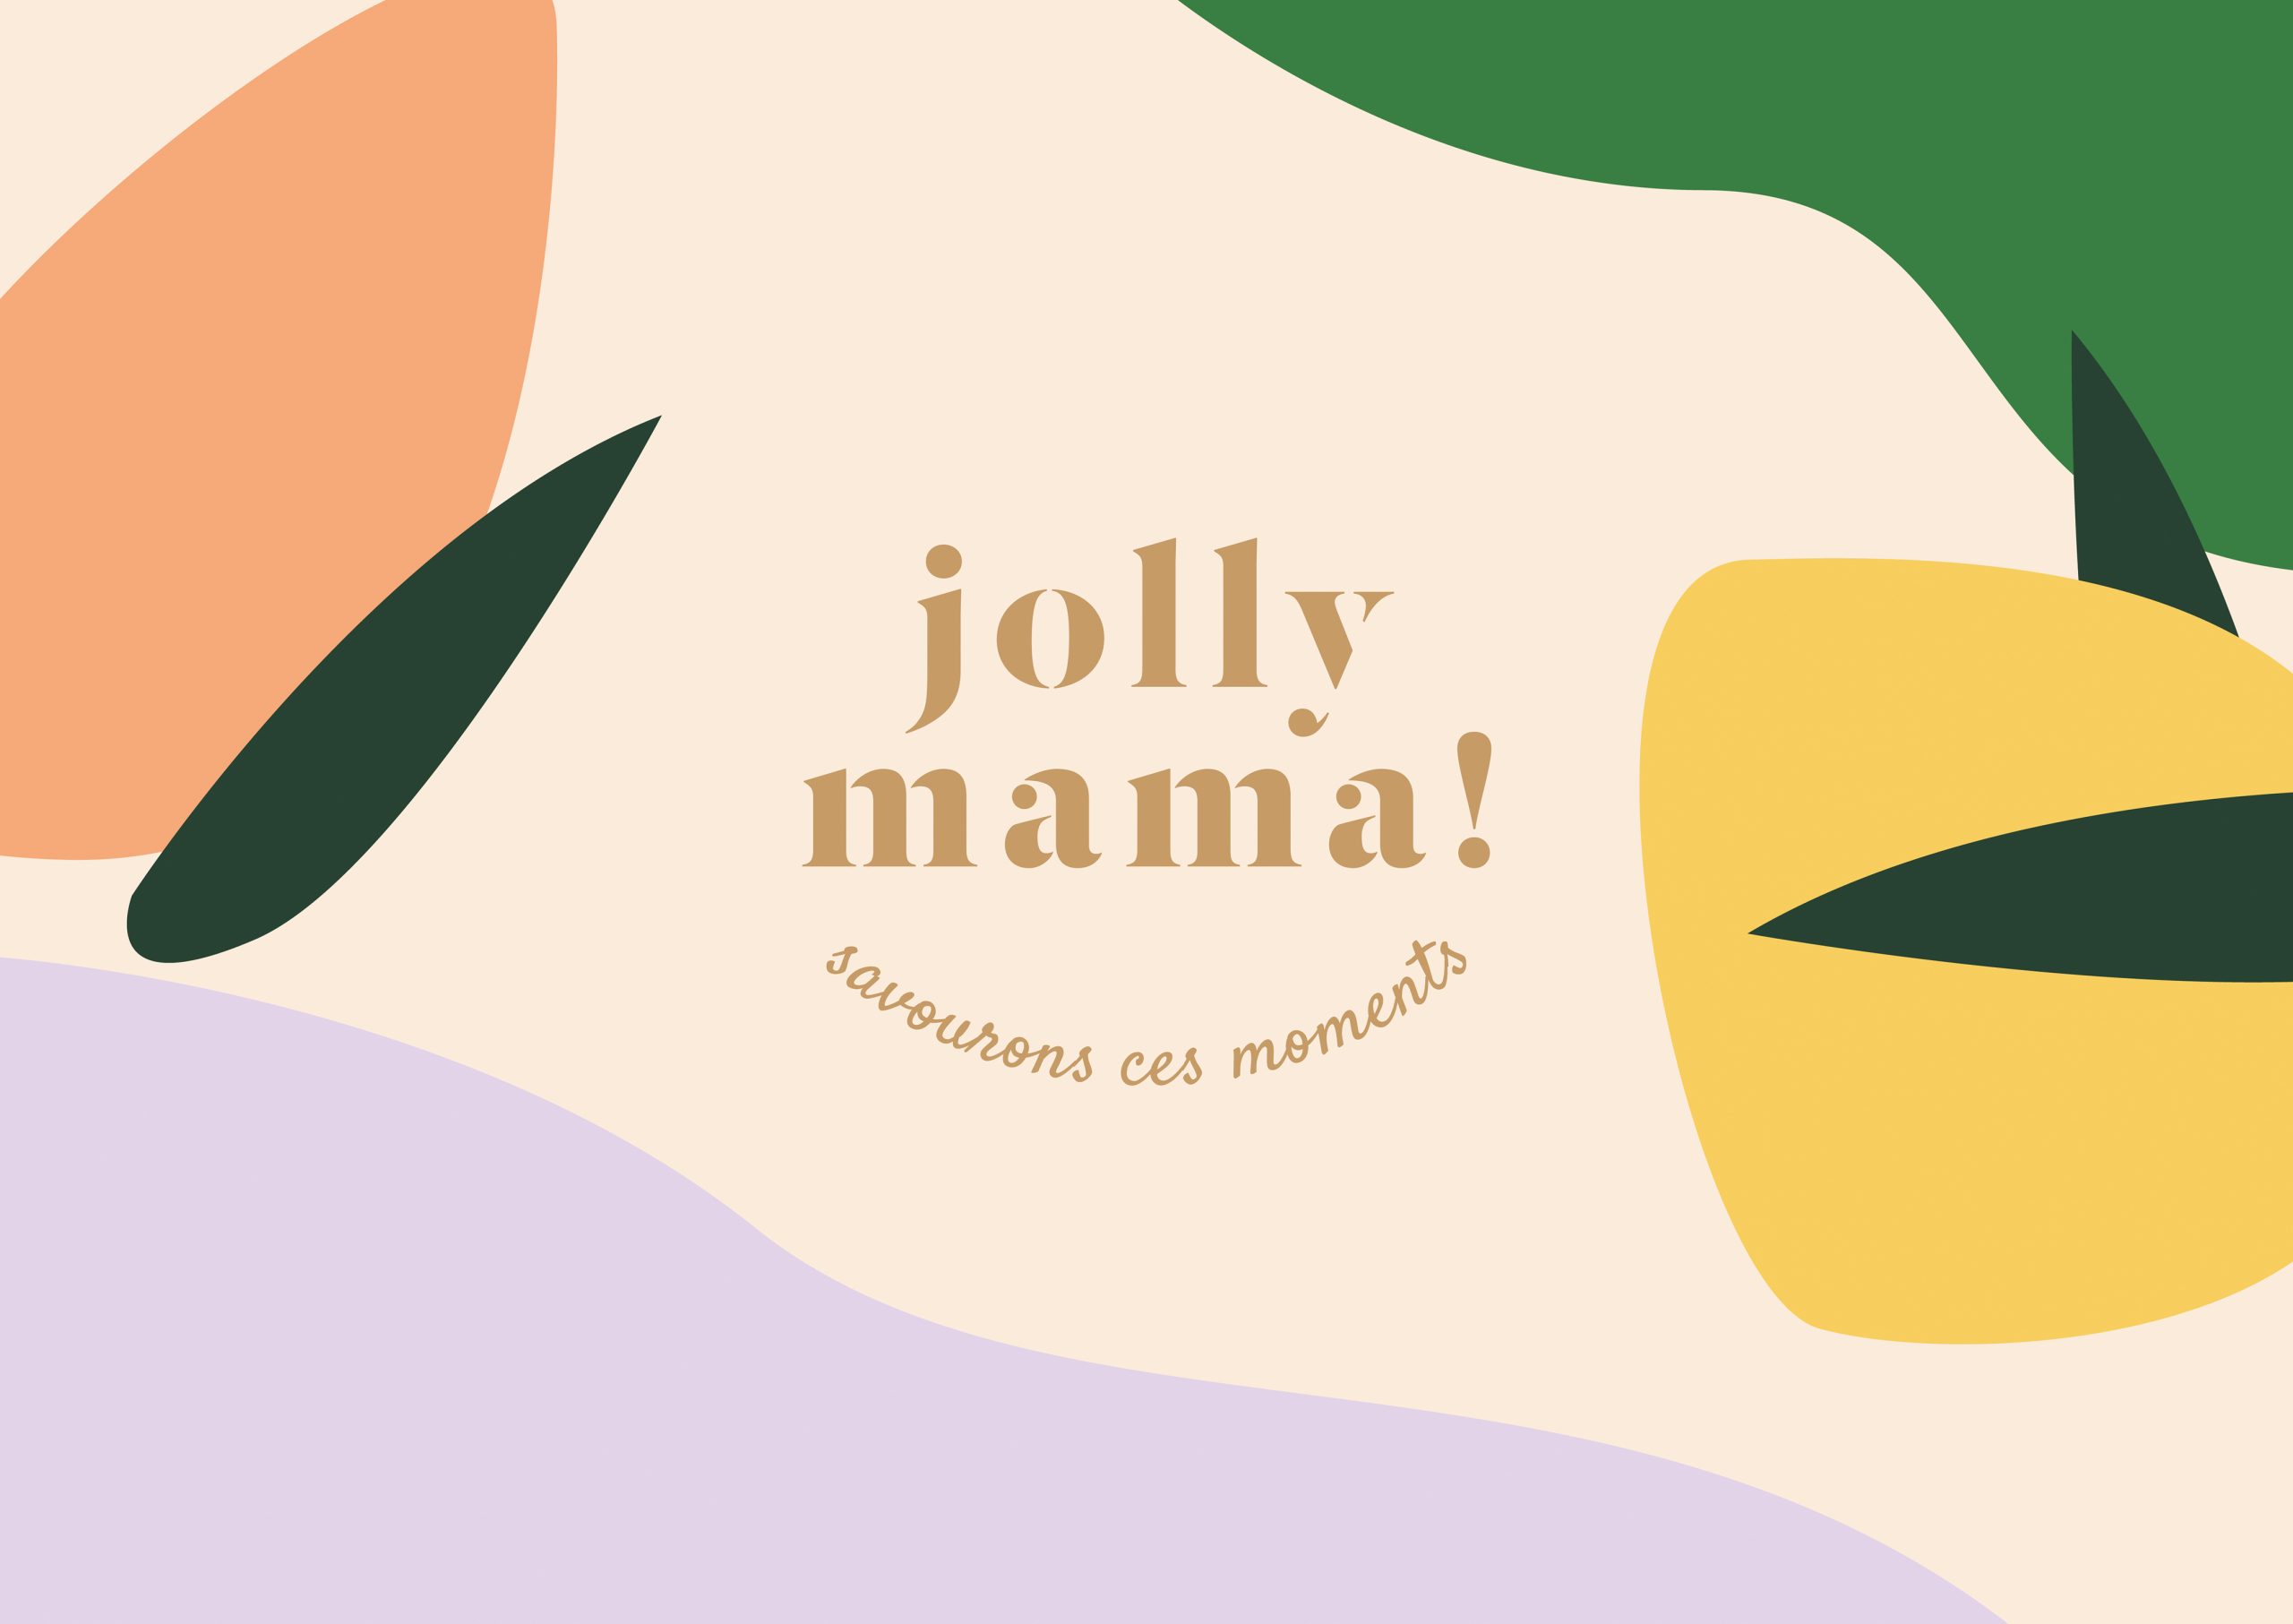 Jolly Mama identité visuelle et accompagnement global - LaPetiteGrosse